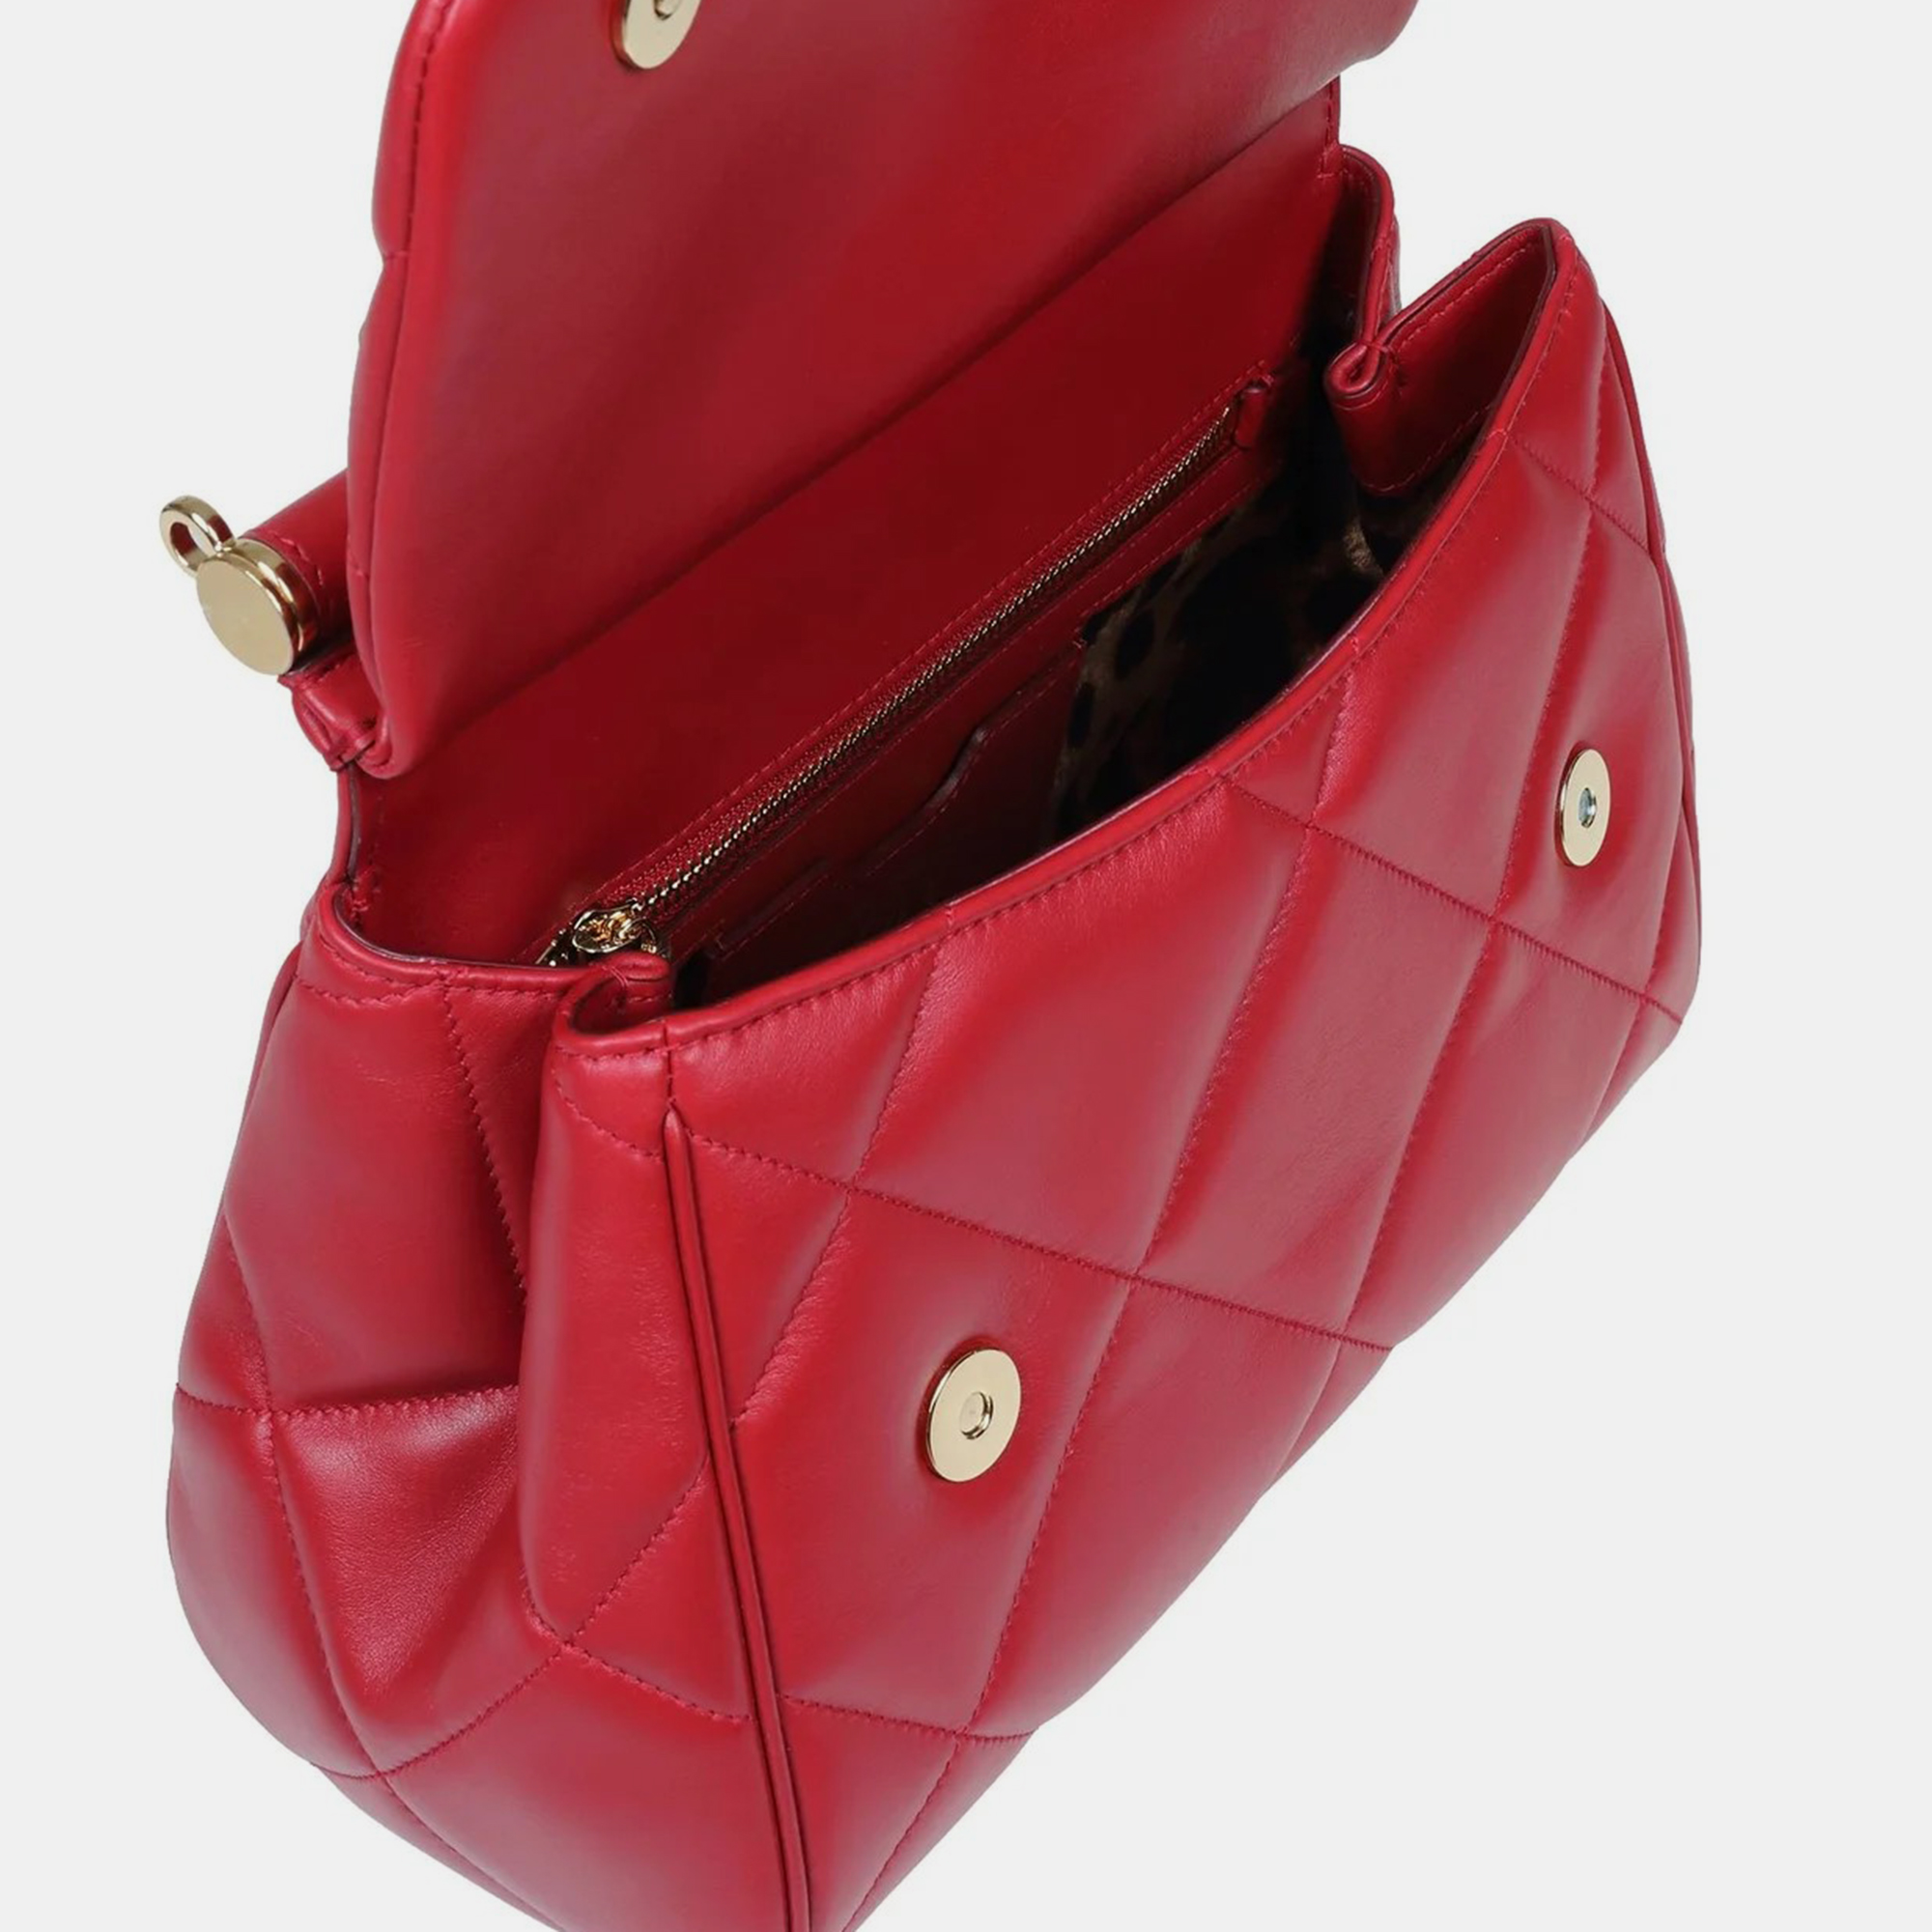 Dolce & Gabbana Red Leather  Medium Sicily Top Handle Bag